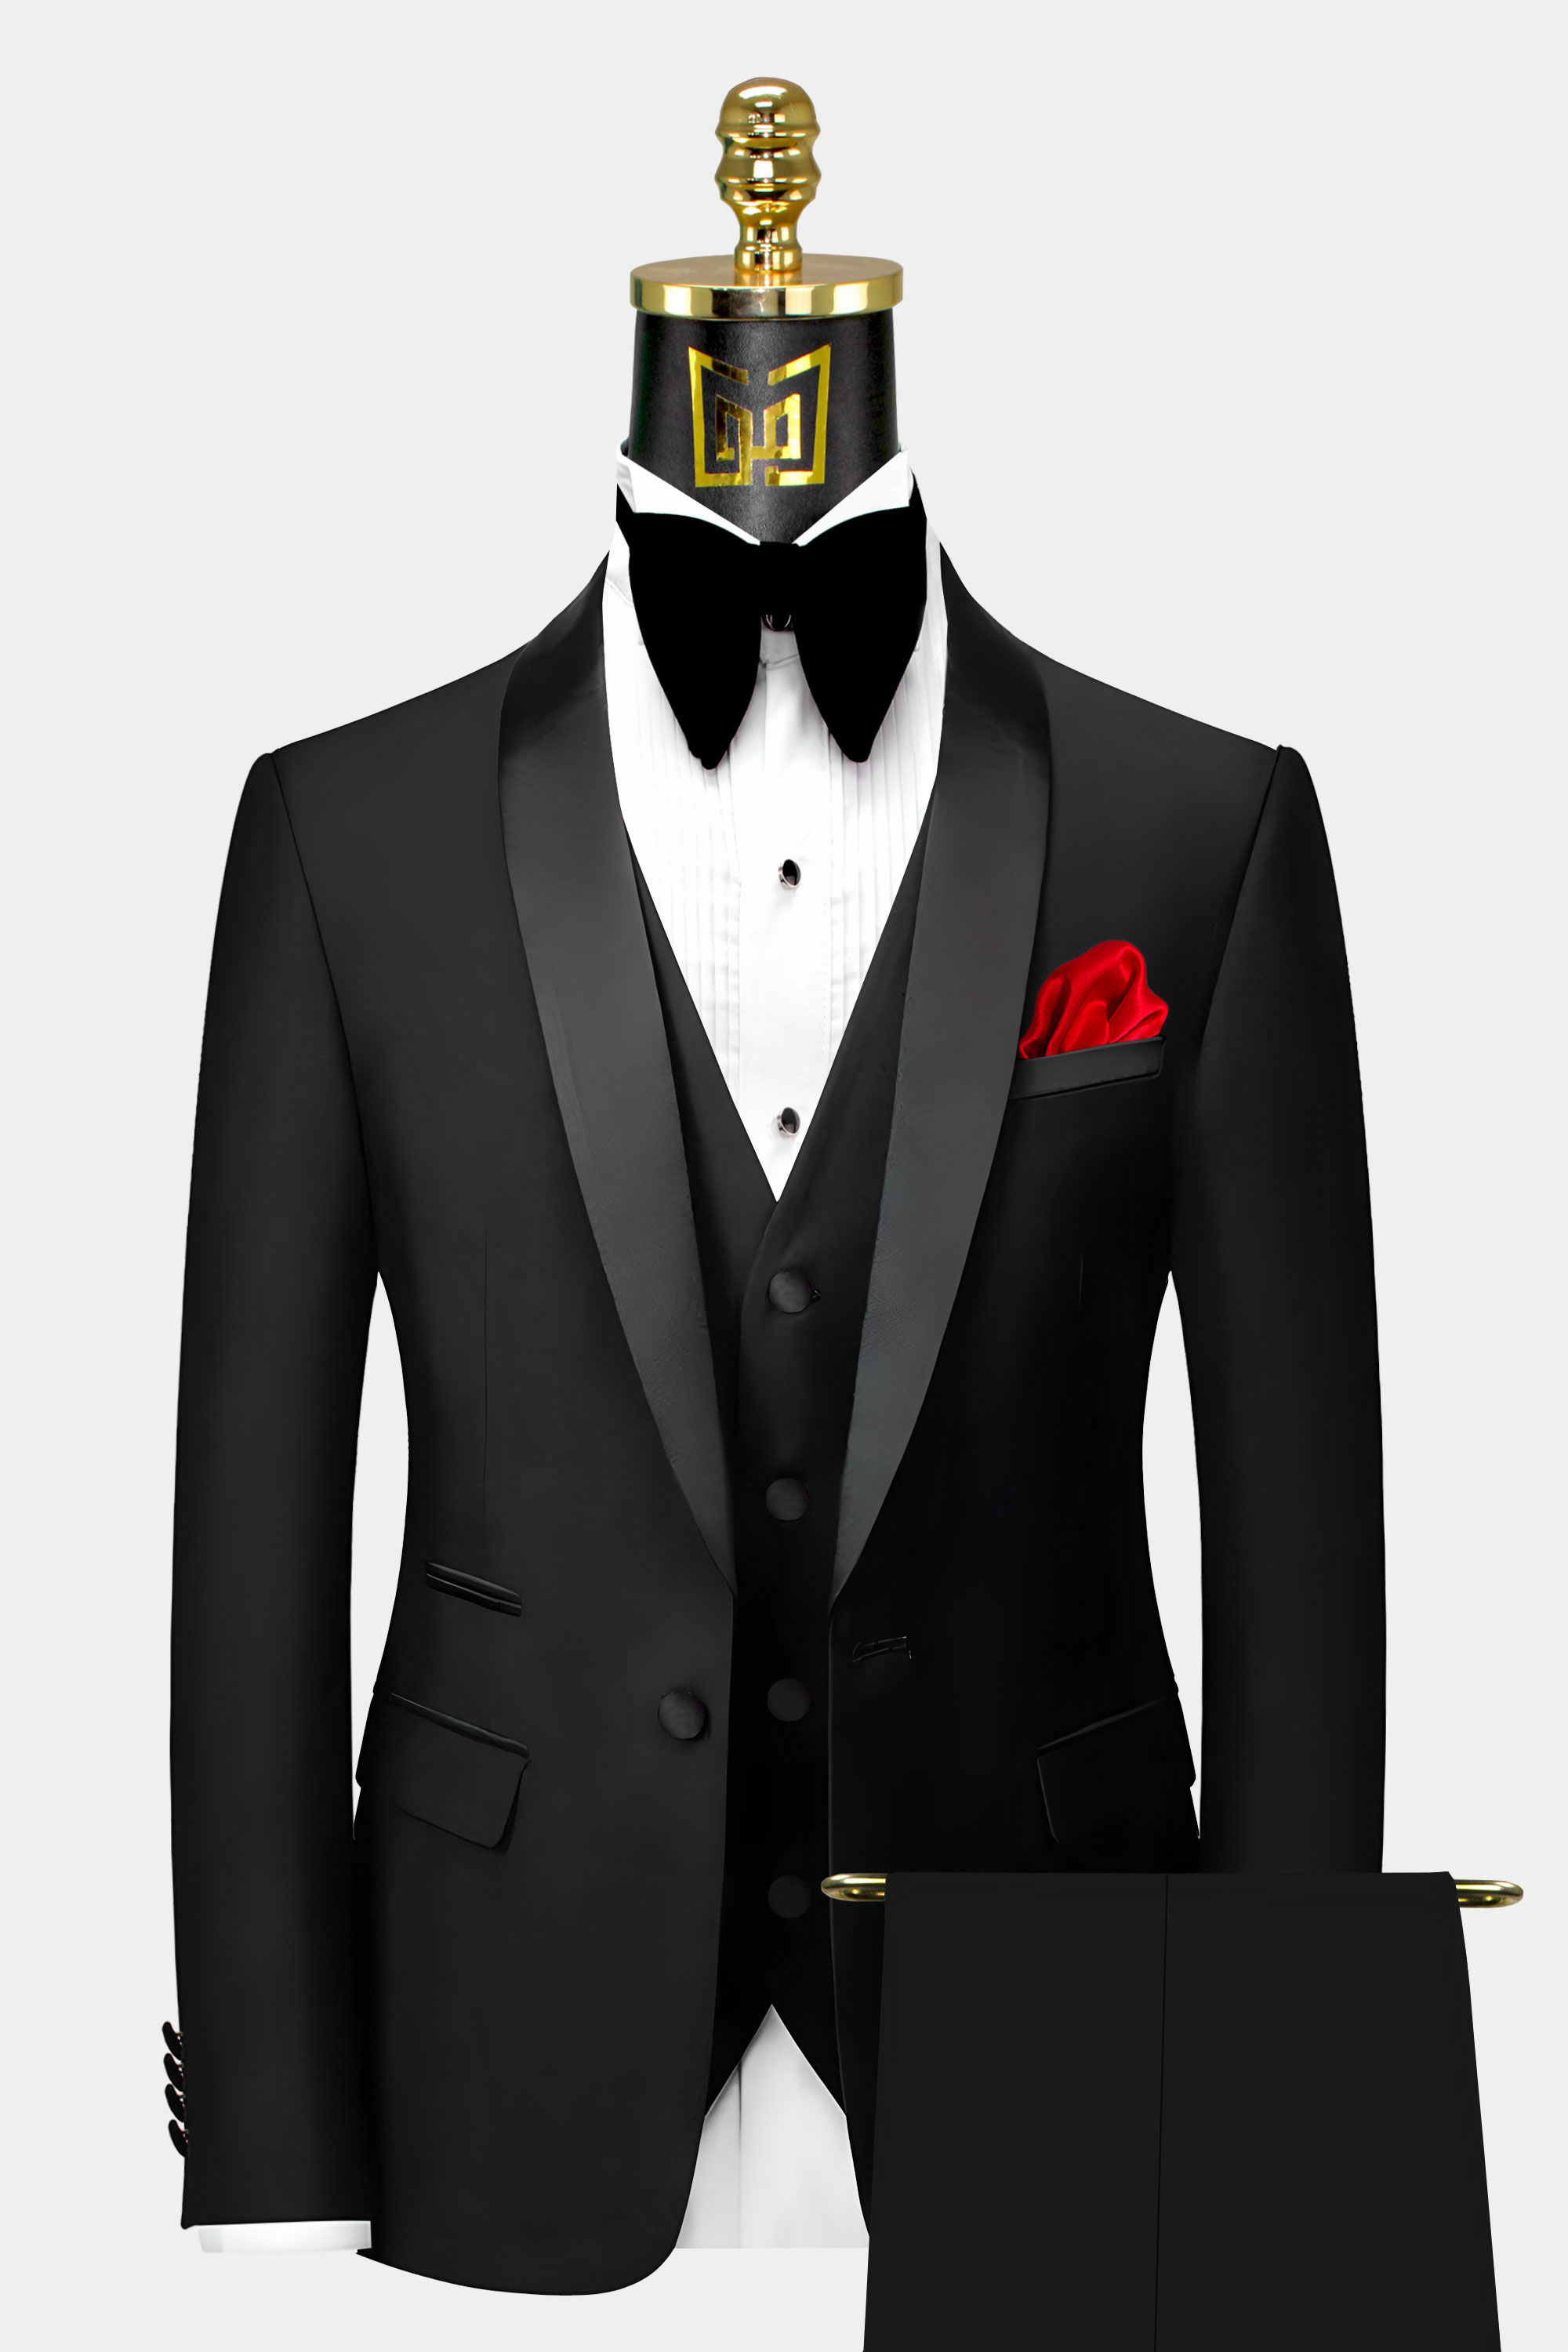 Buy Men's Black Tuxedos With Belt, 2 Piece Suit Tuxedo Formal